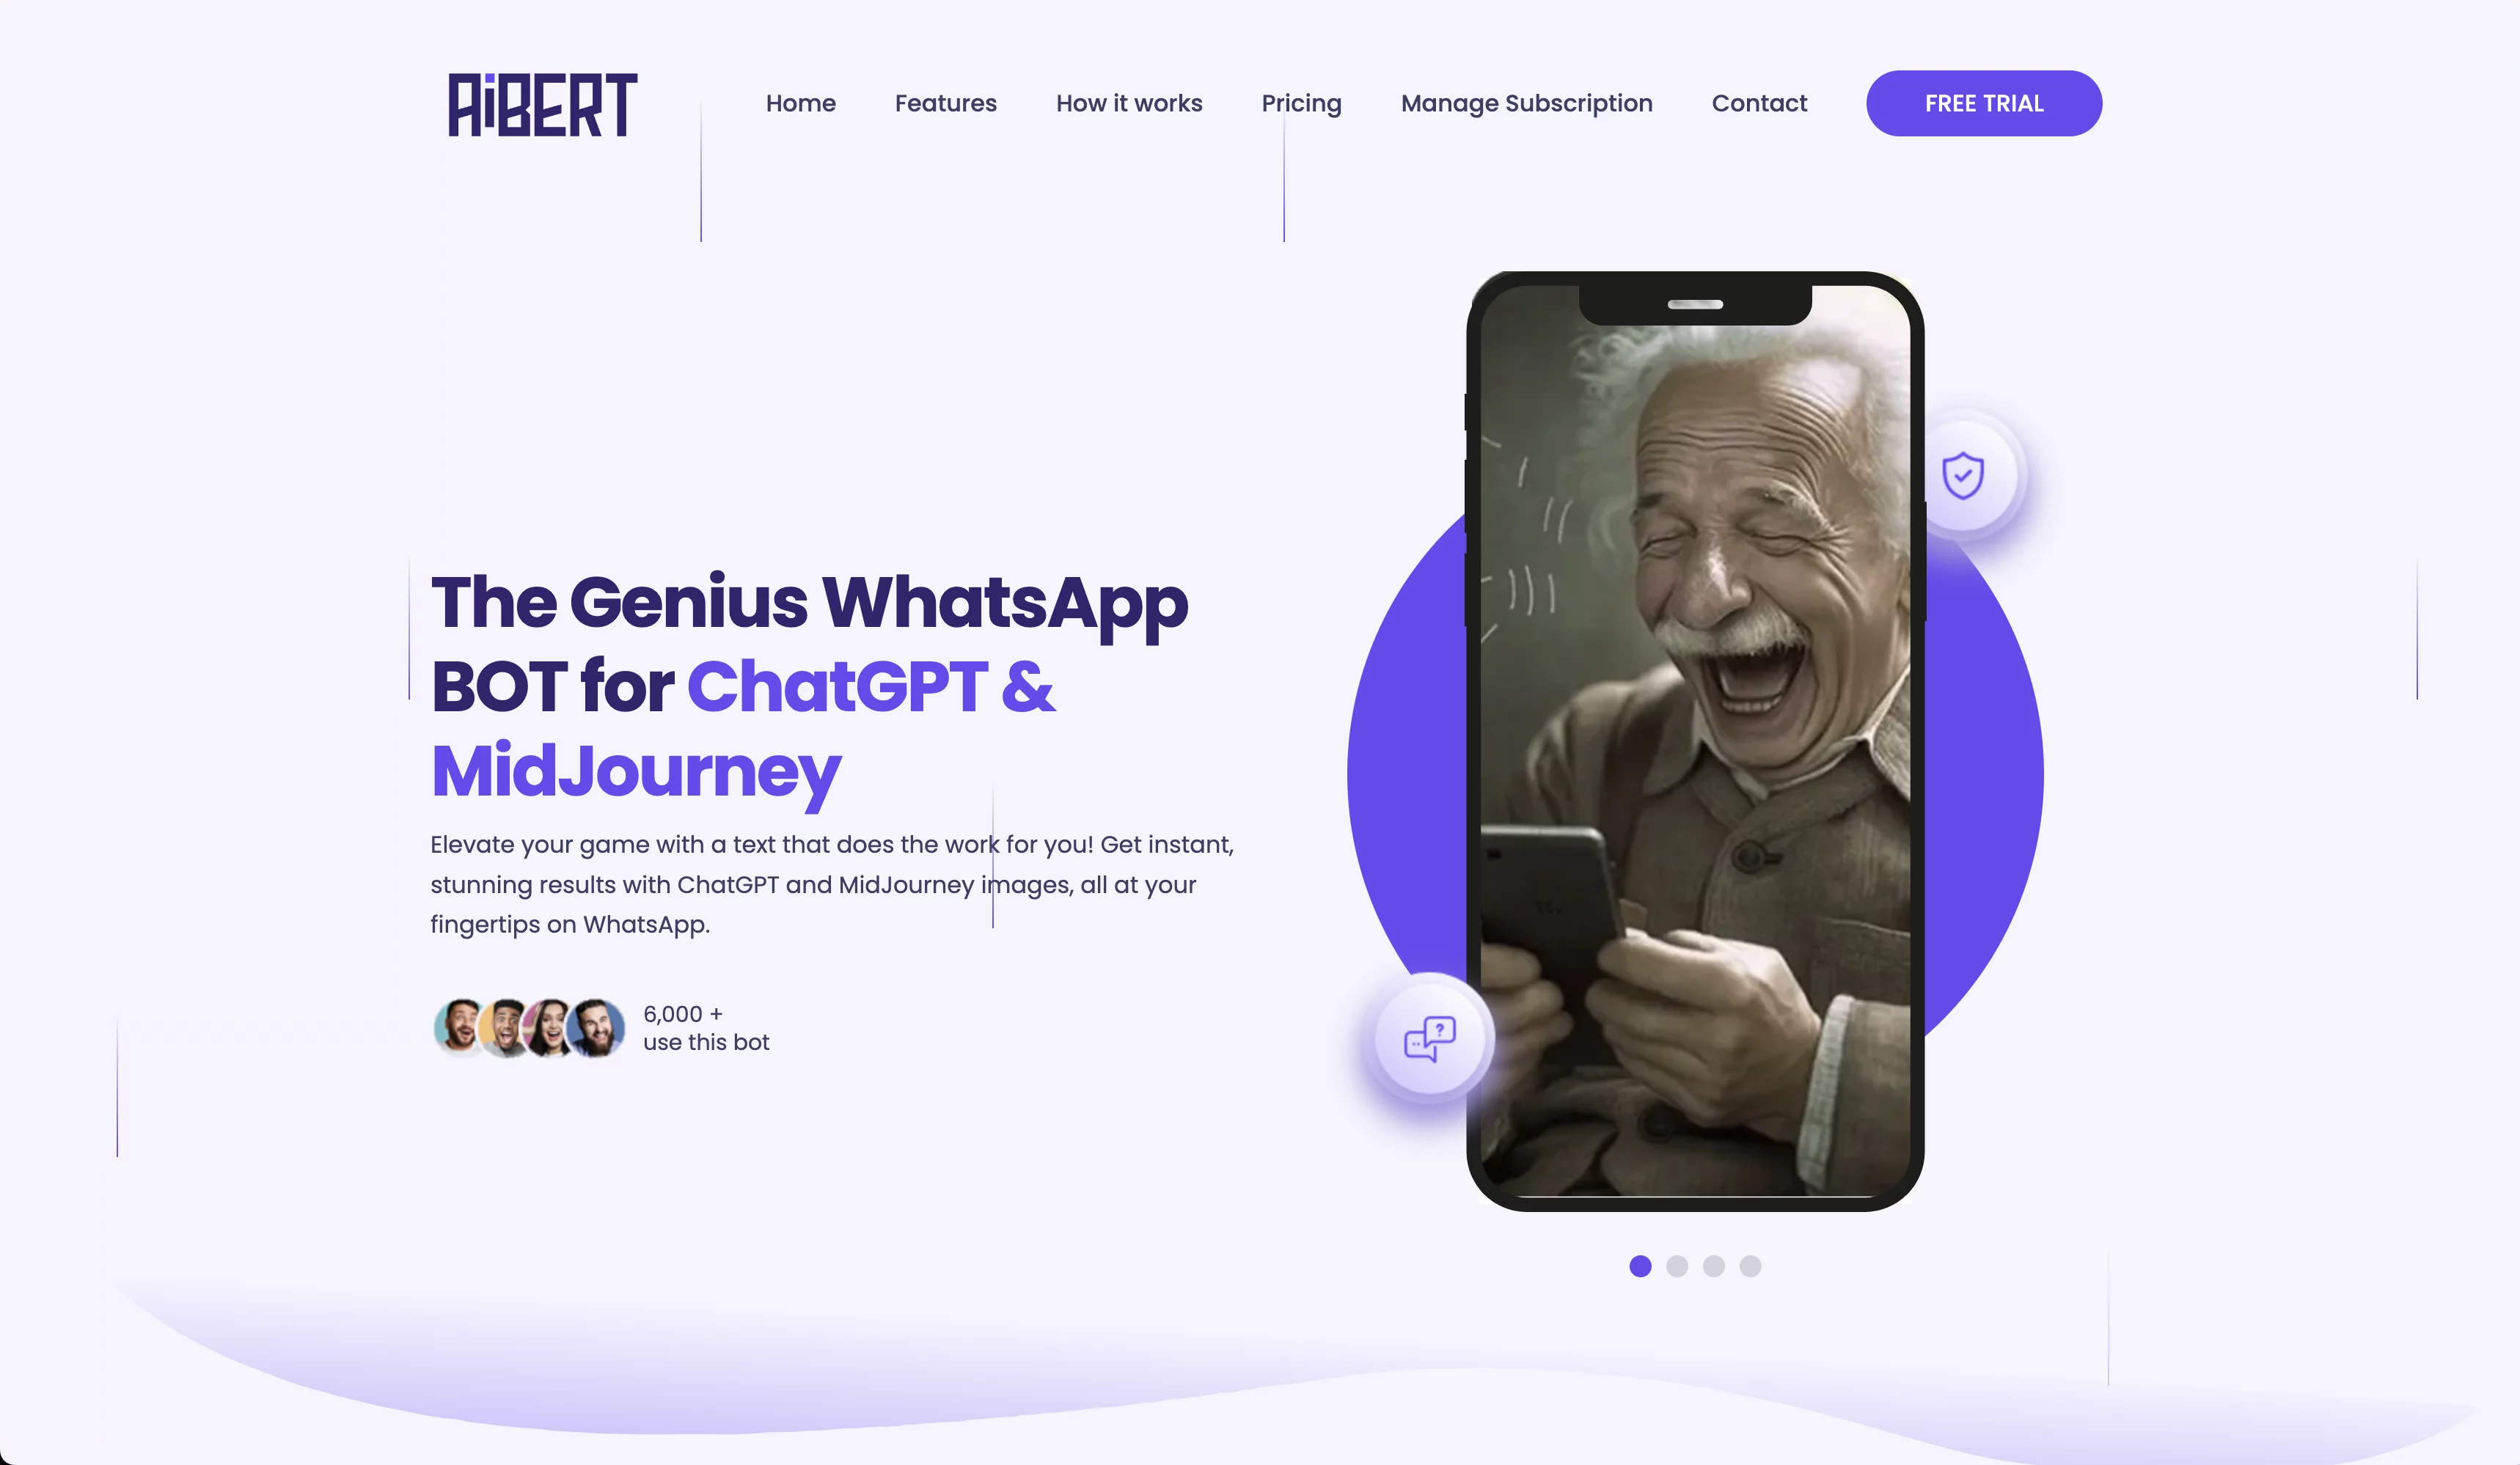  The Genius WhatsApp BOT for ChatGPT & MidJourney